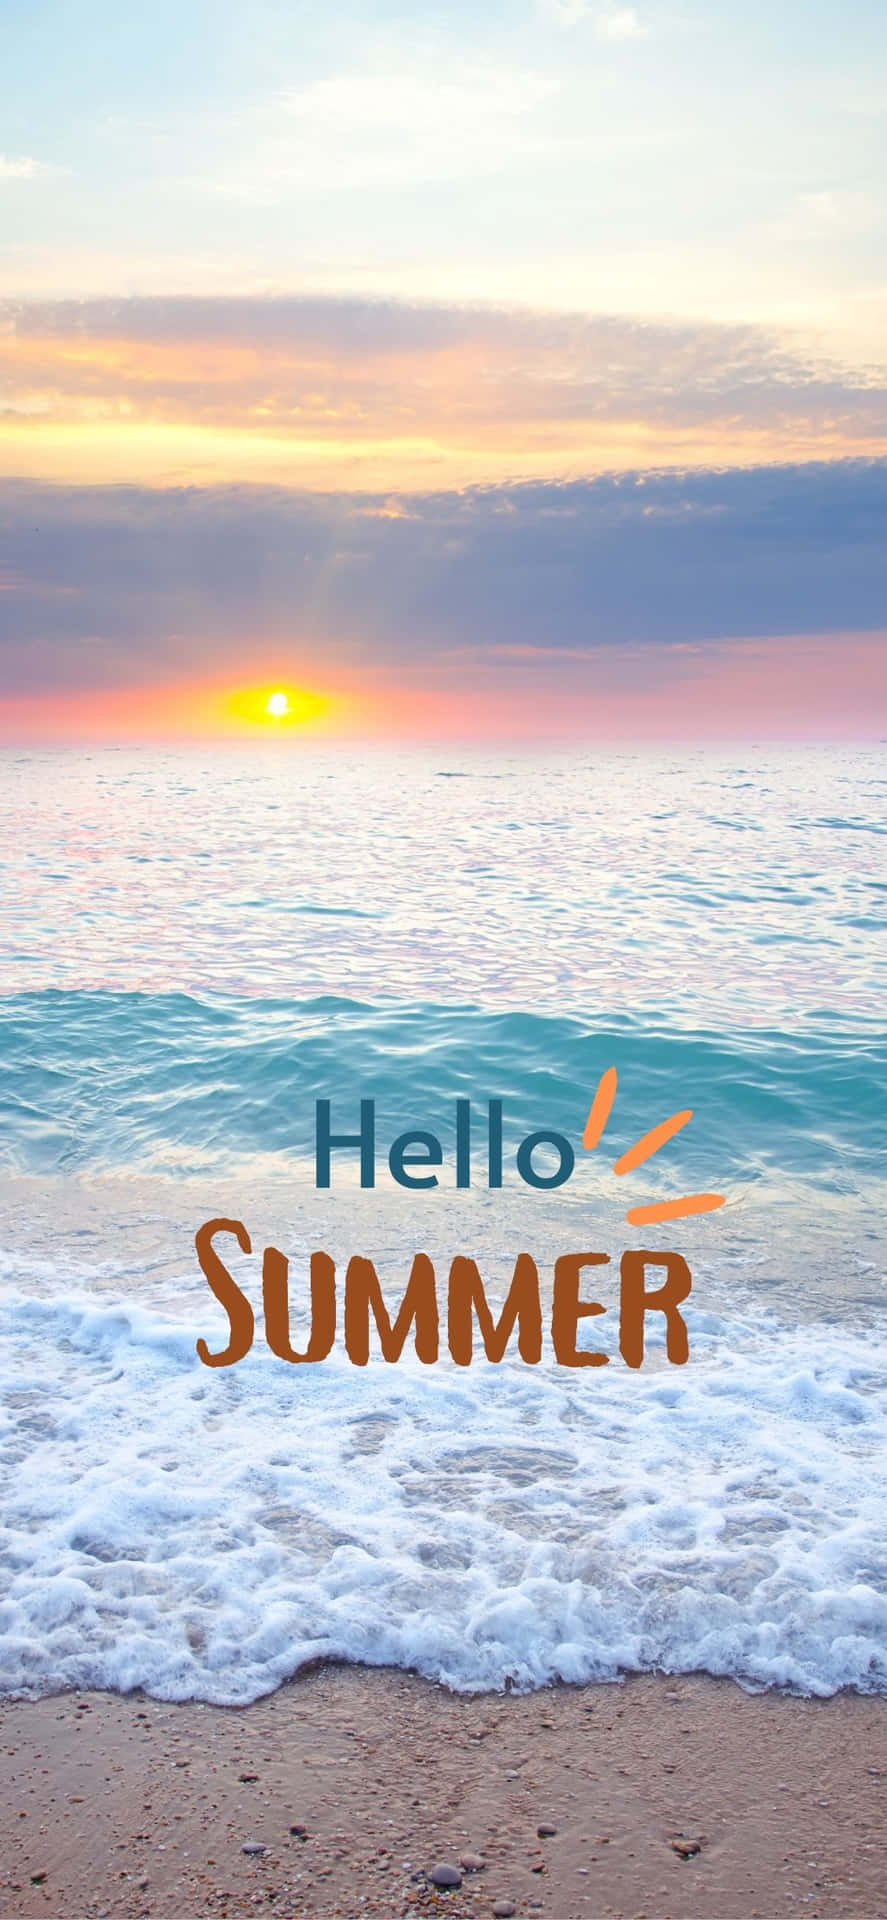 Hello Summer Sunset iPhone X Summer Background